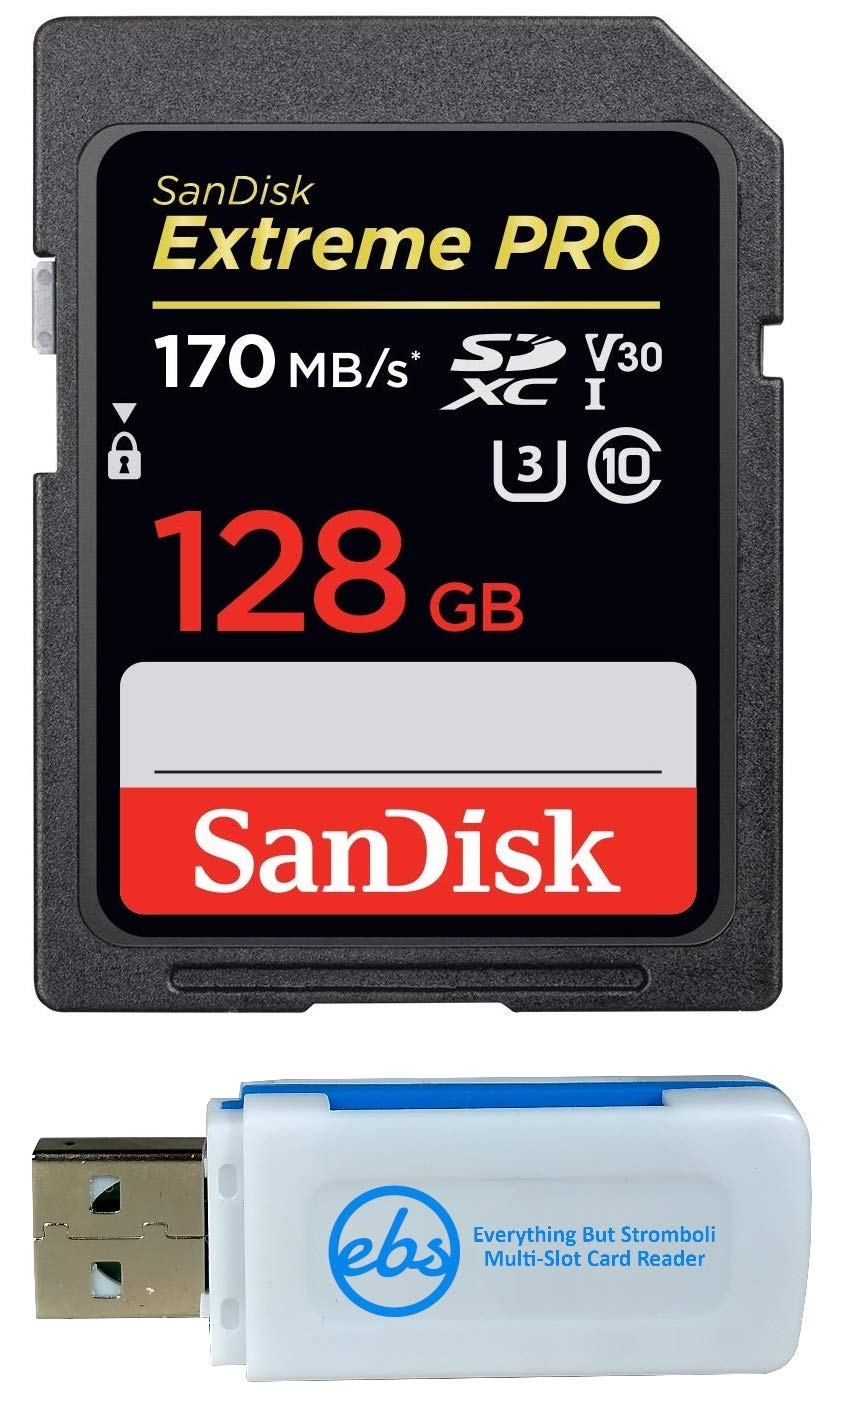 [Australia - AusPower] - SanDisk 128GB Extreme Pro Memory Card for FujiFilm X-T2, X100F, FinePix S8600, X-S1, X-T10, X-A1, X100T Digital DSLR Camera SDXC High Speed 4K V30 UHS-I with Everything But Stromboli Reader 